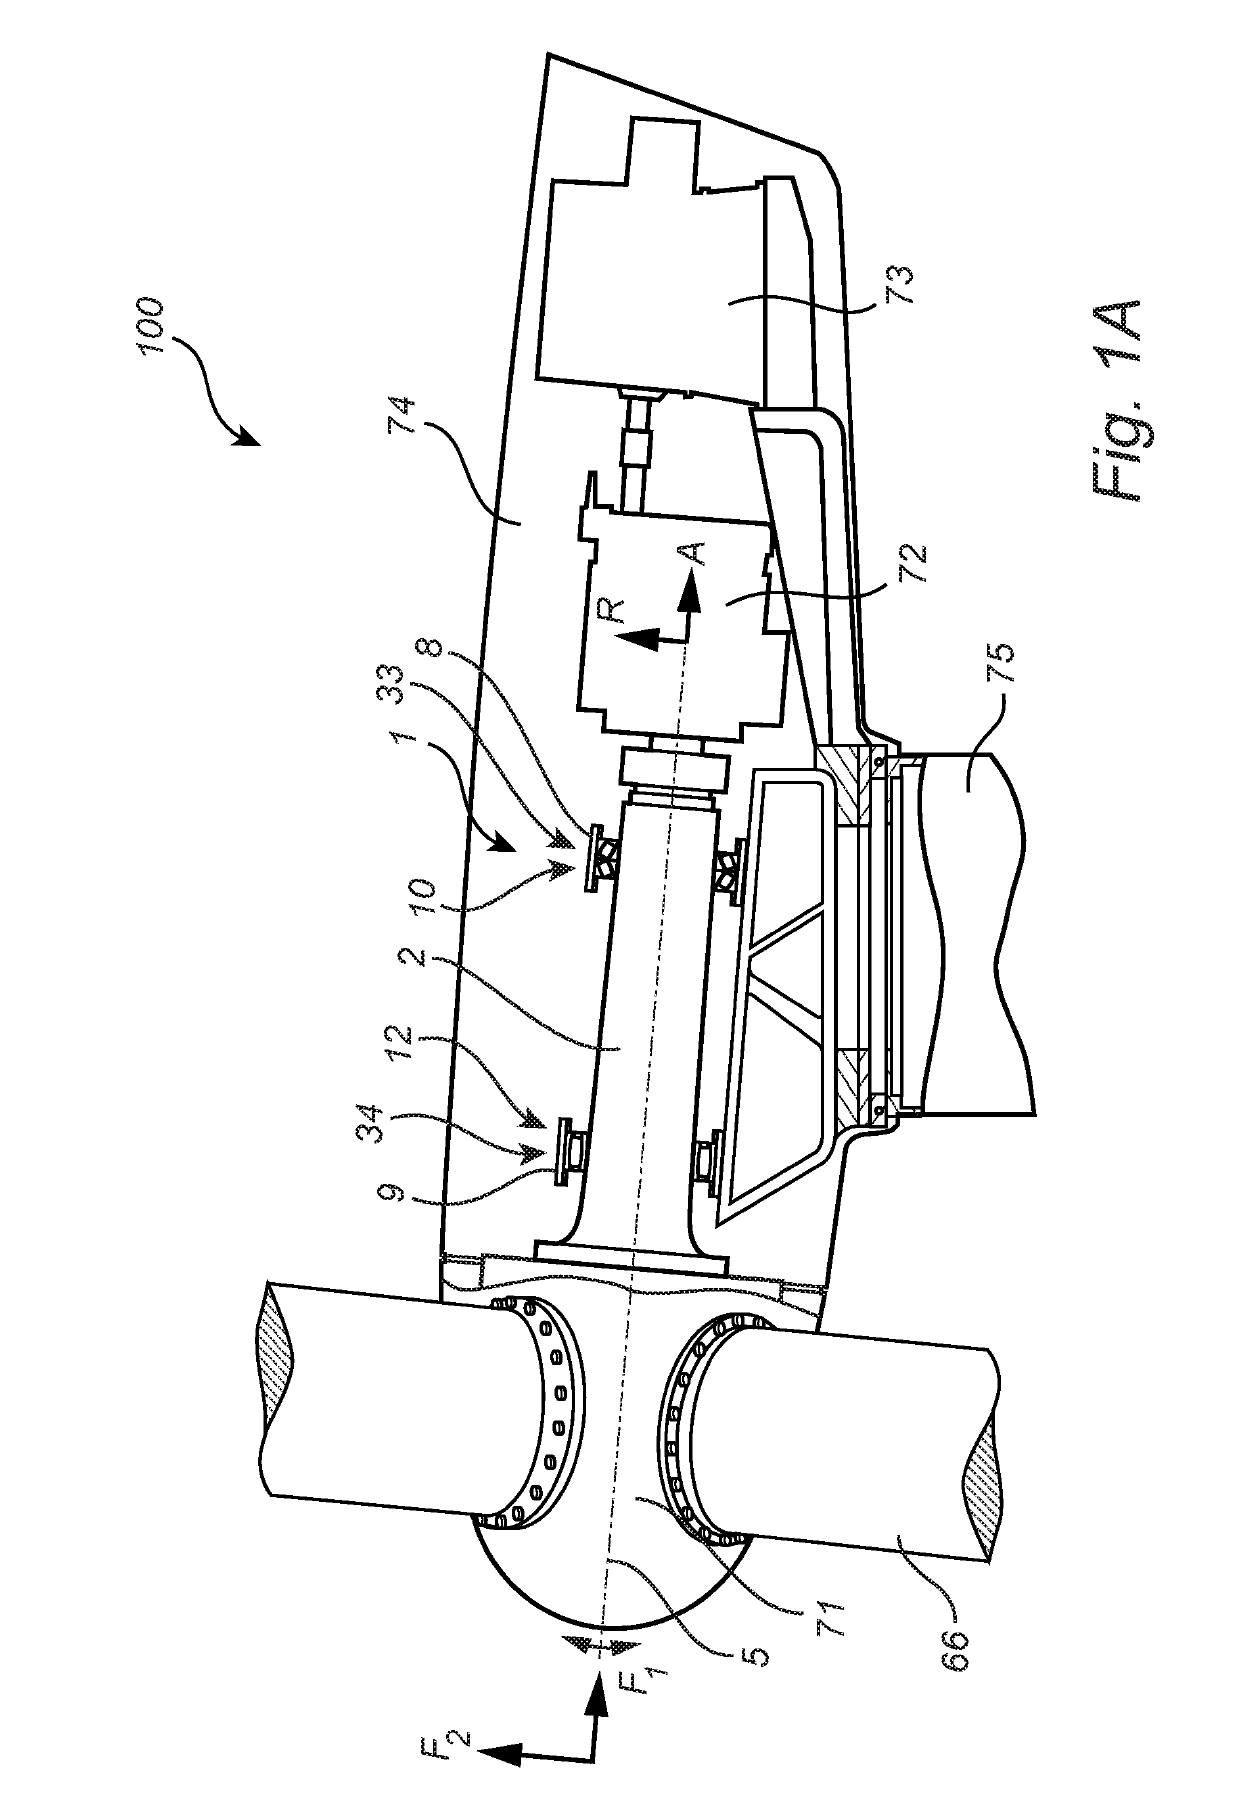 Bearing arrangement for fluid machinery application